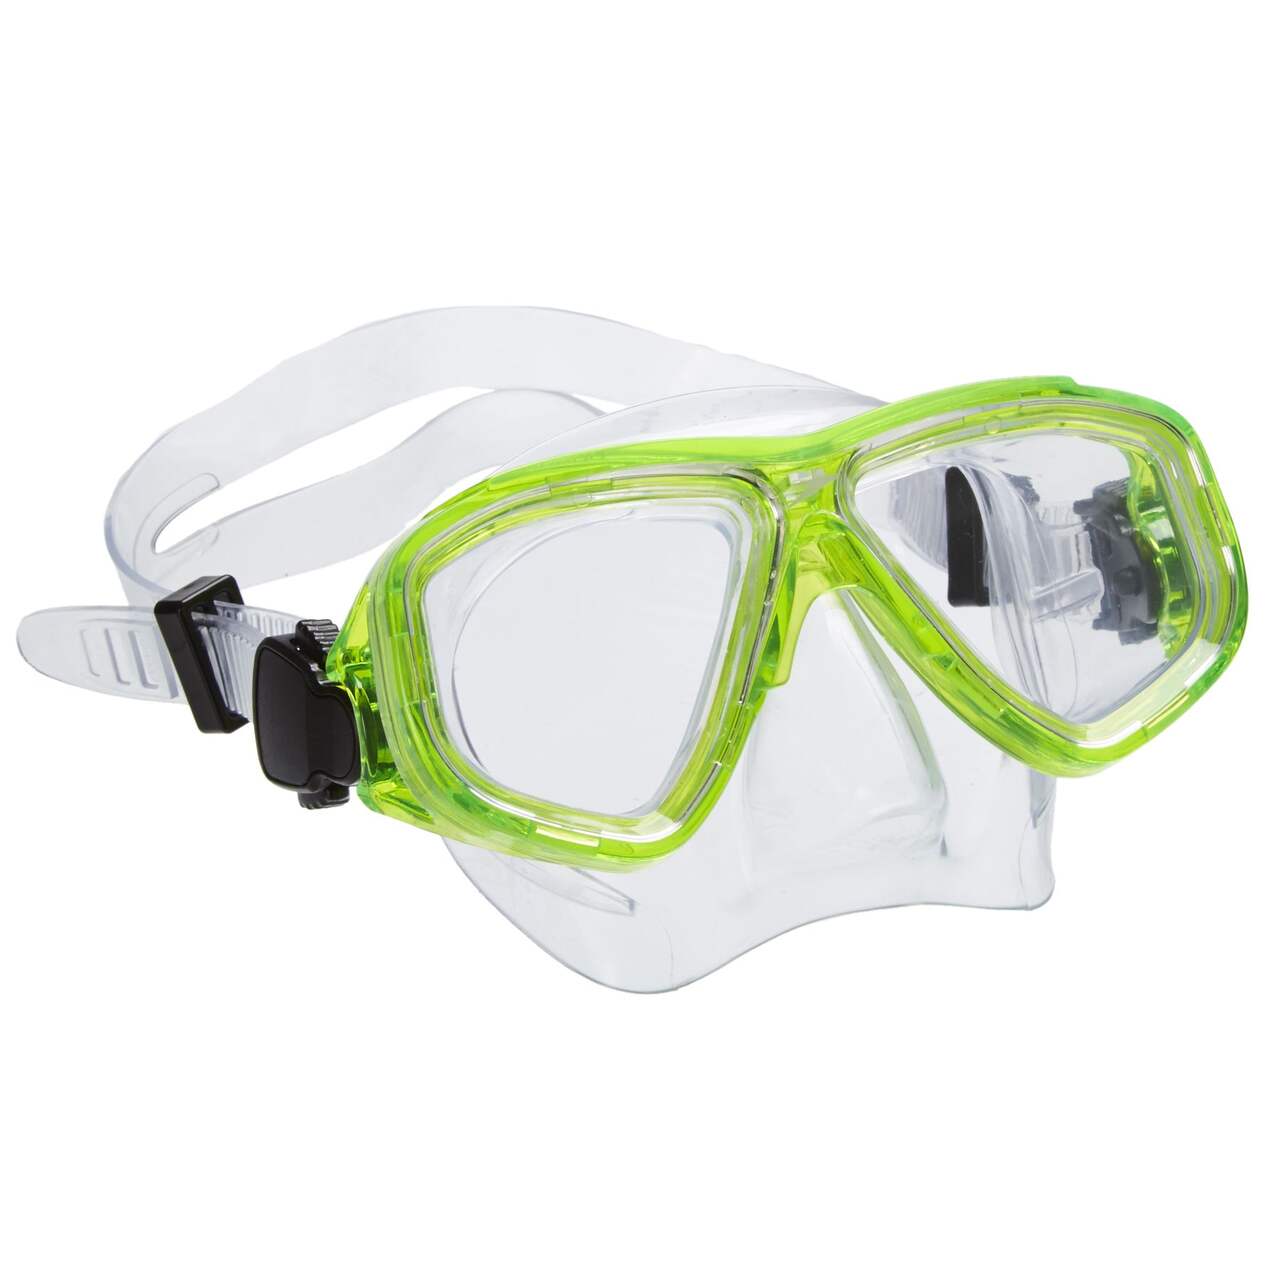 Masque de natation Laguna Green de style récréatif